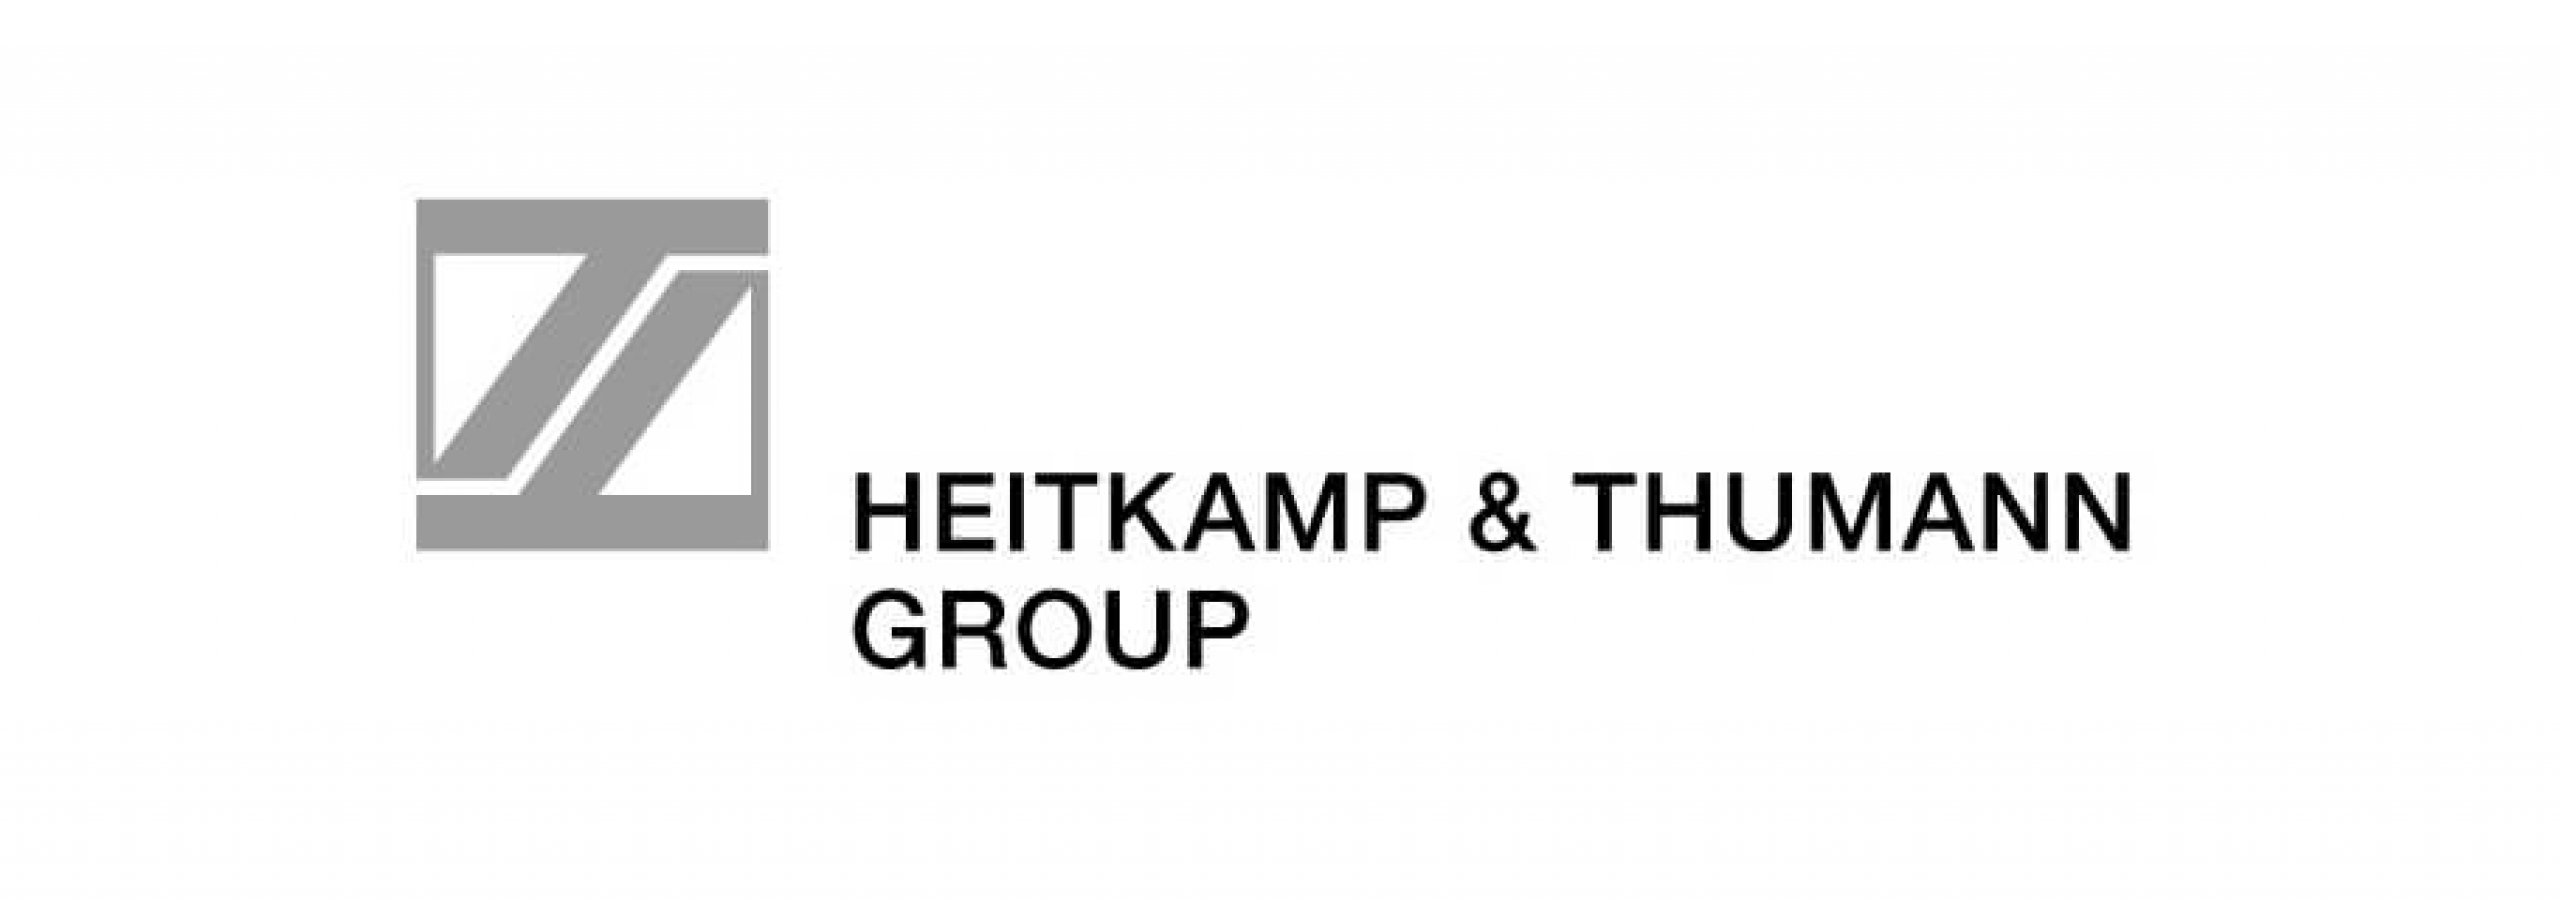 ht group logo